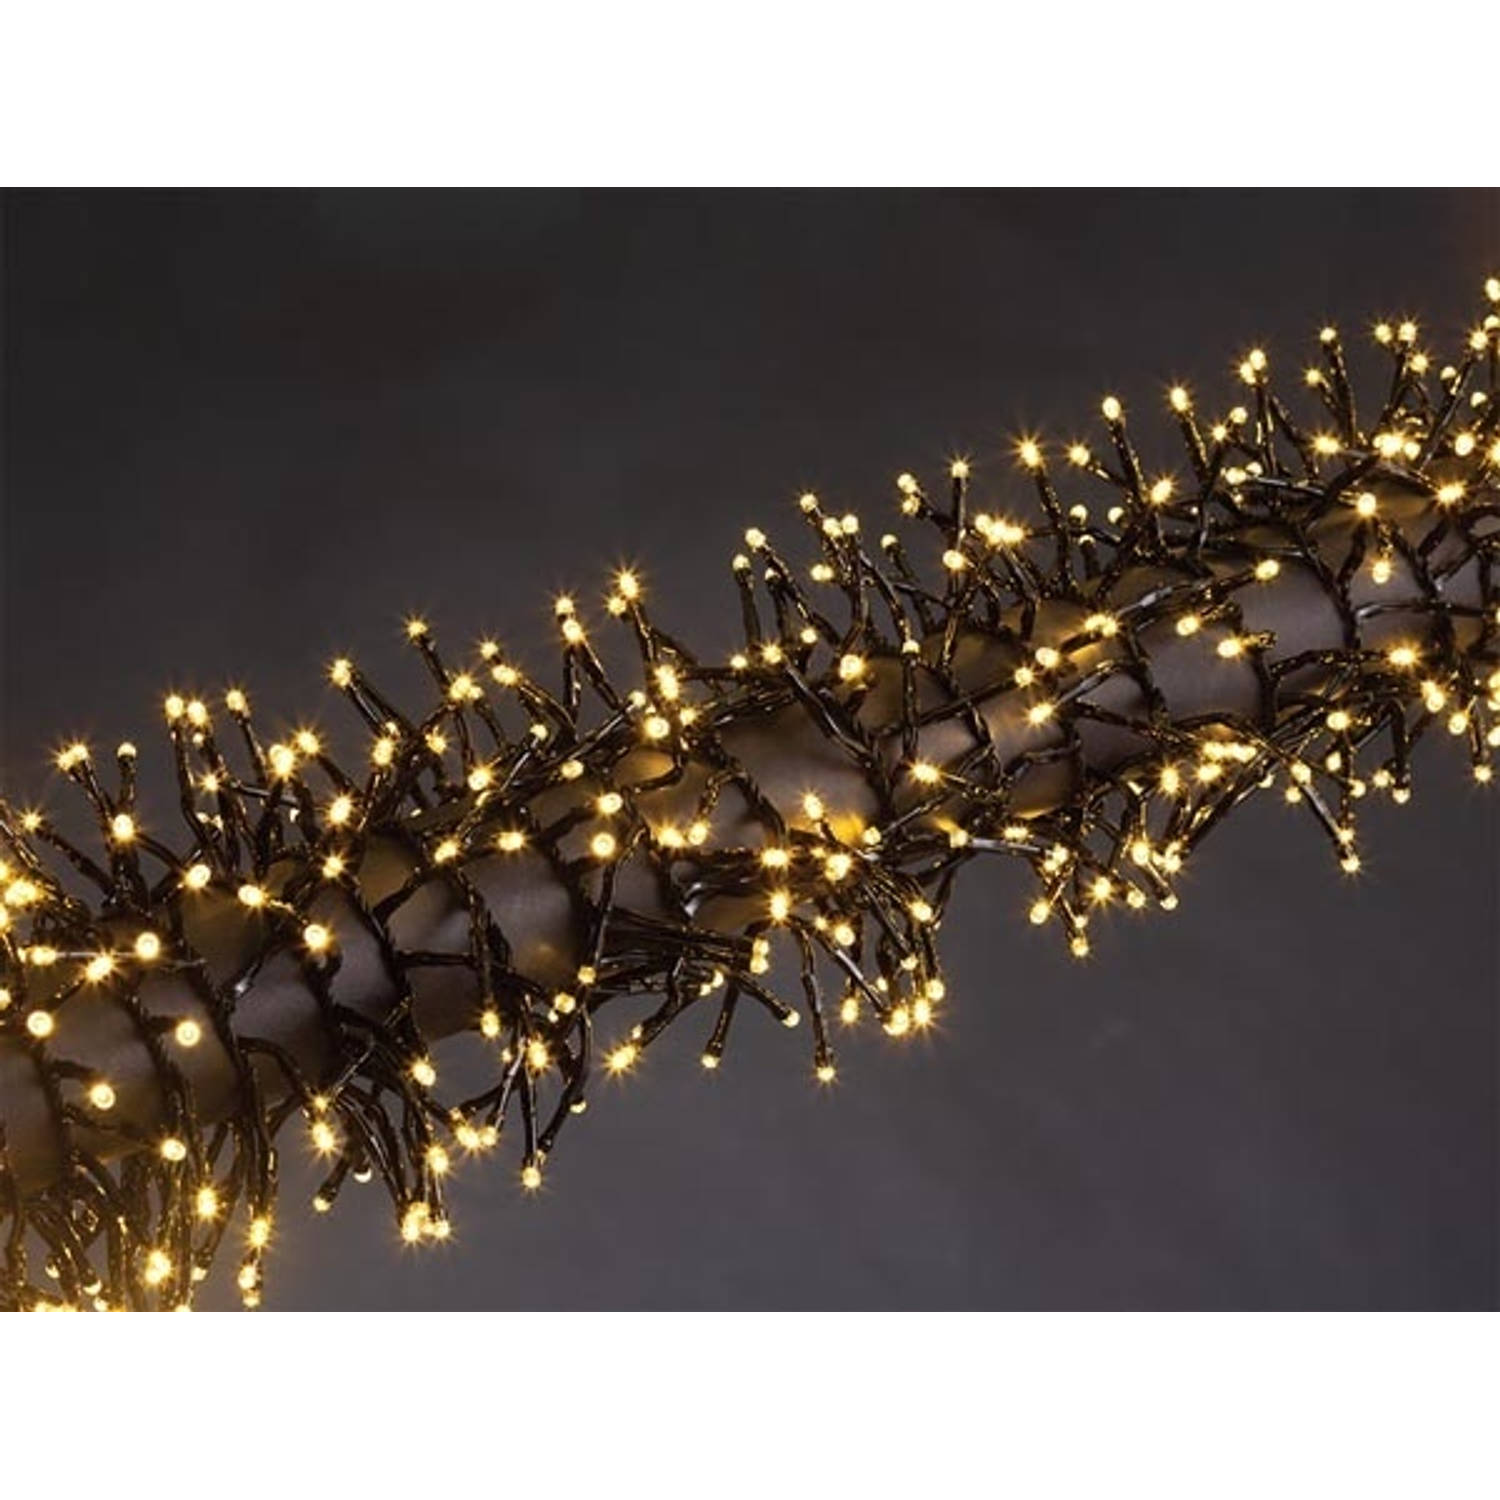 Vellight Kerstverlichting - 12m - 1020 LED's - Warm Wit - Binnen & Buiten